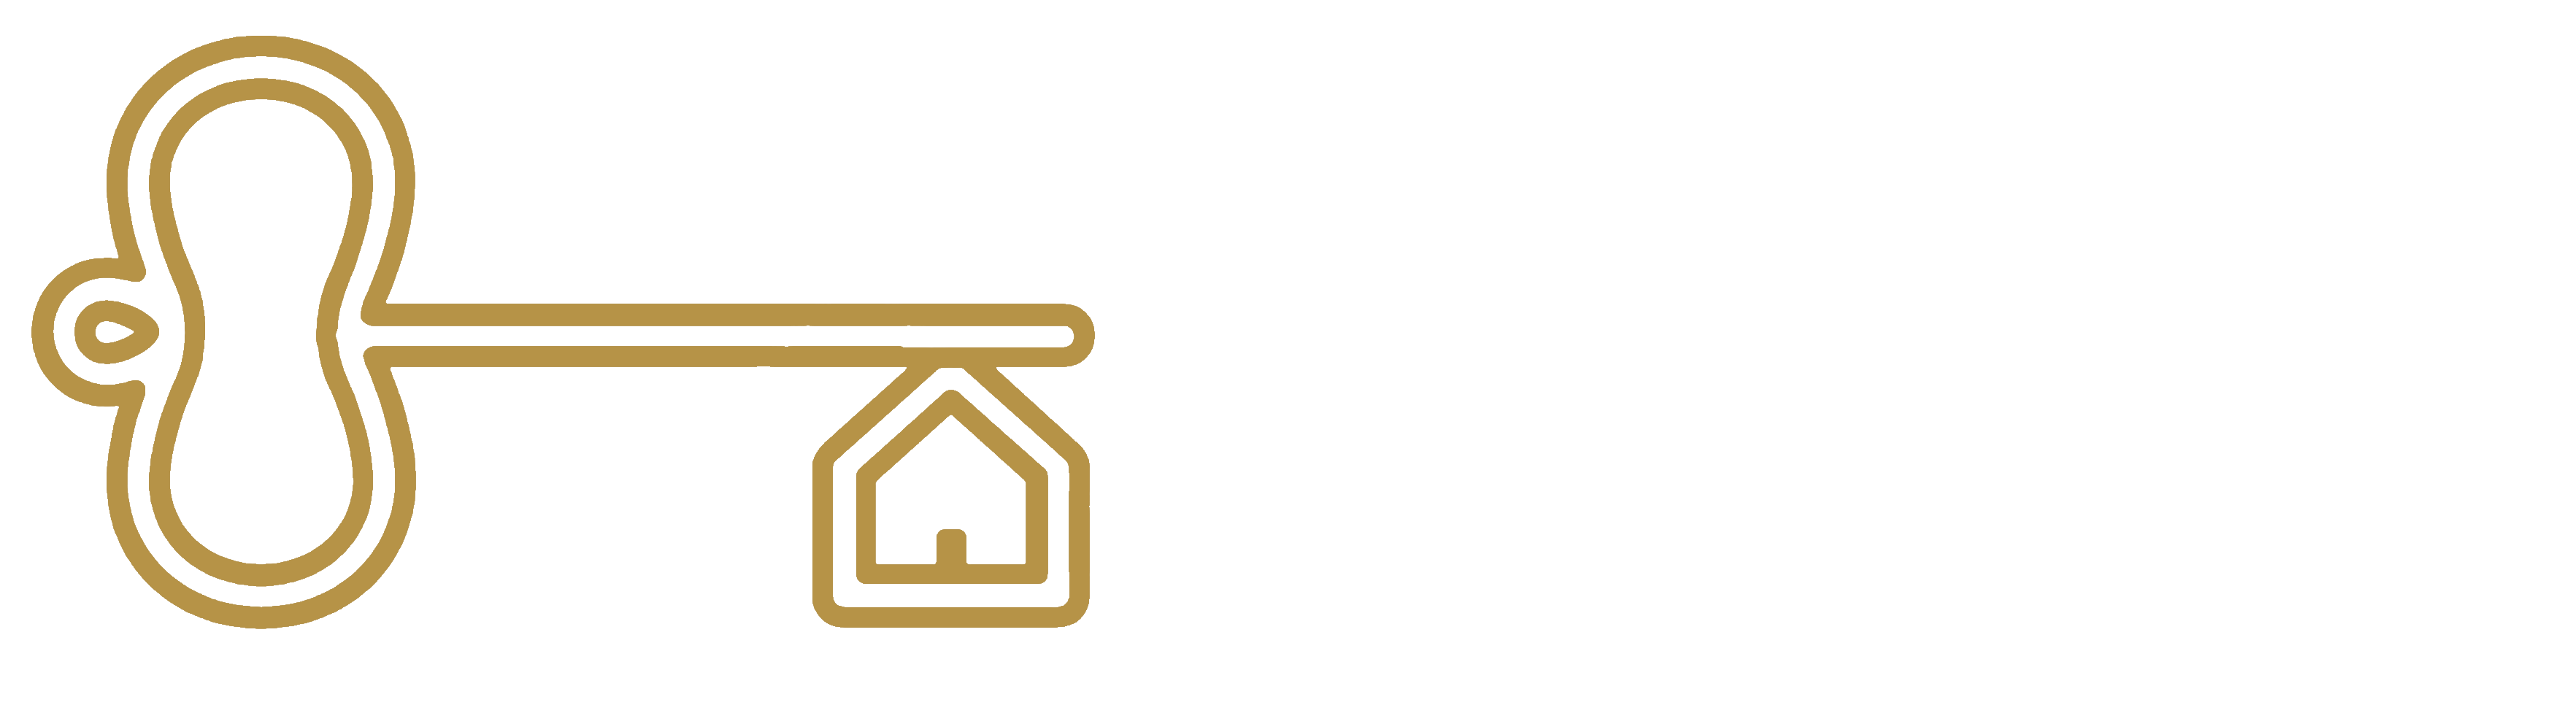 Key Rooms Logo.